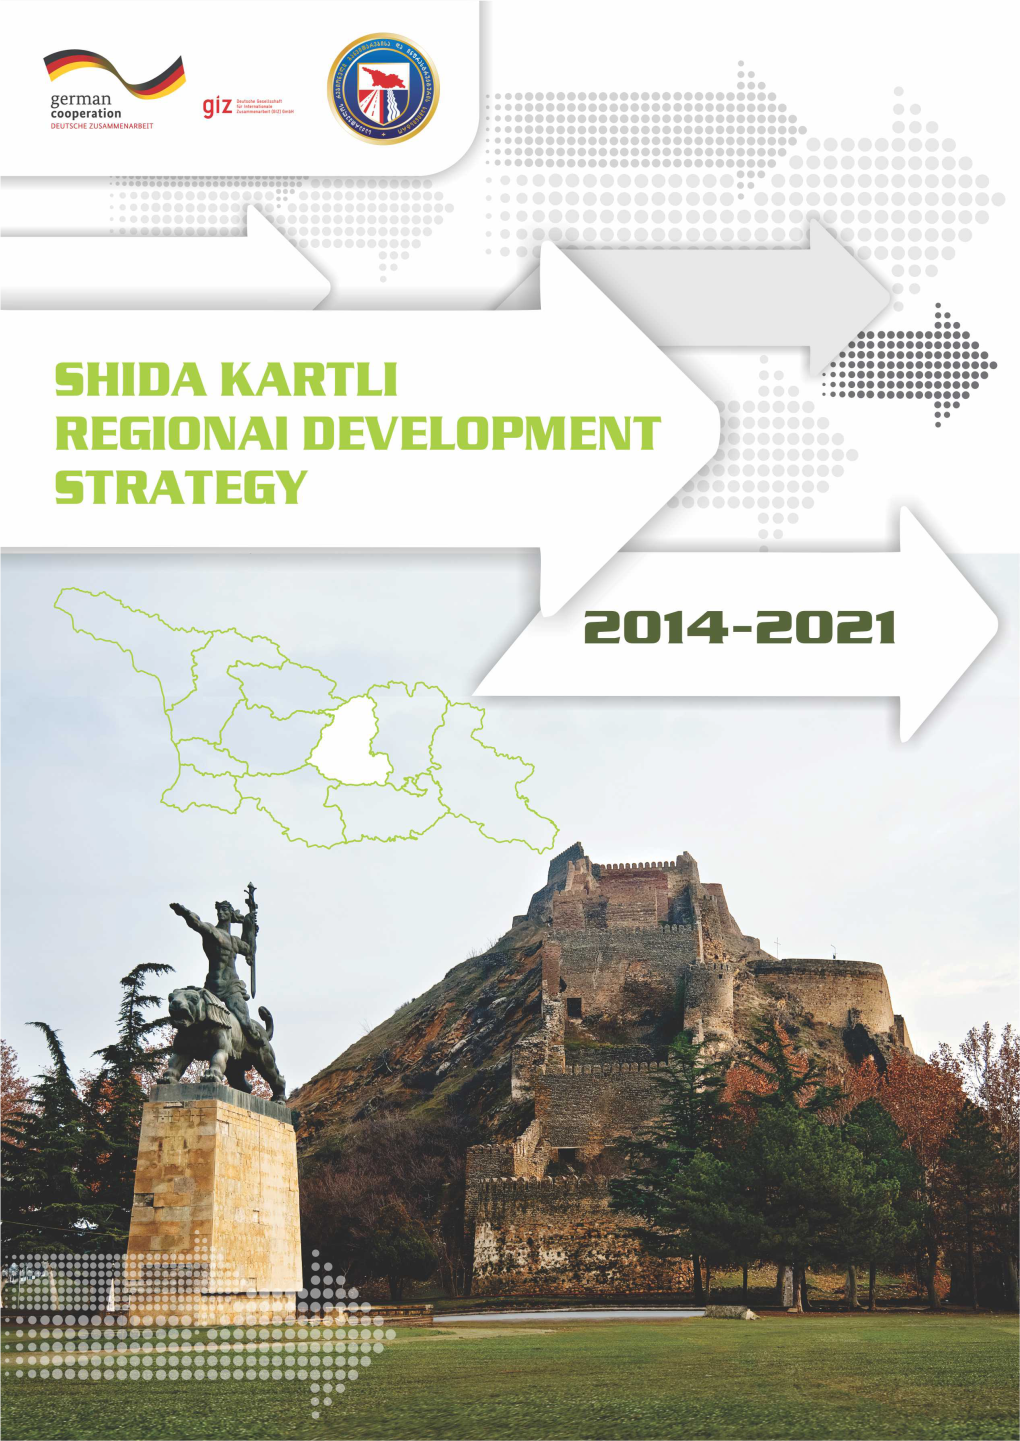 Shida Kartli Regional Development Strategy 2014-2021